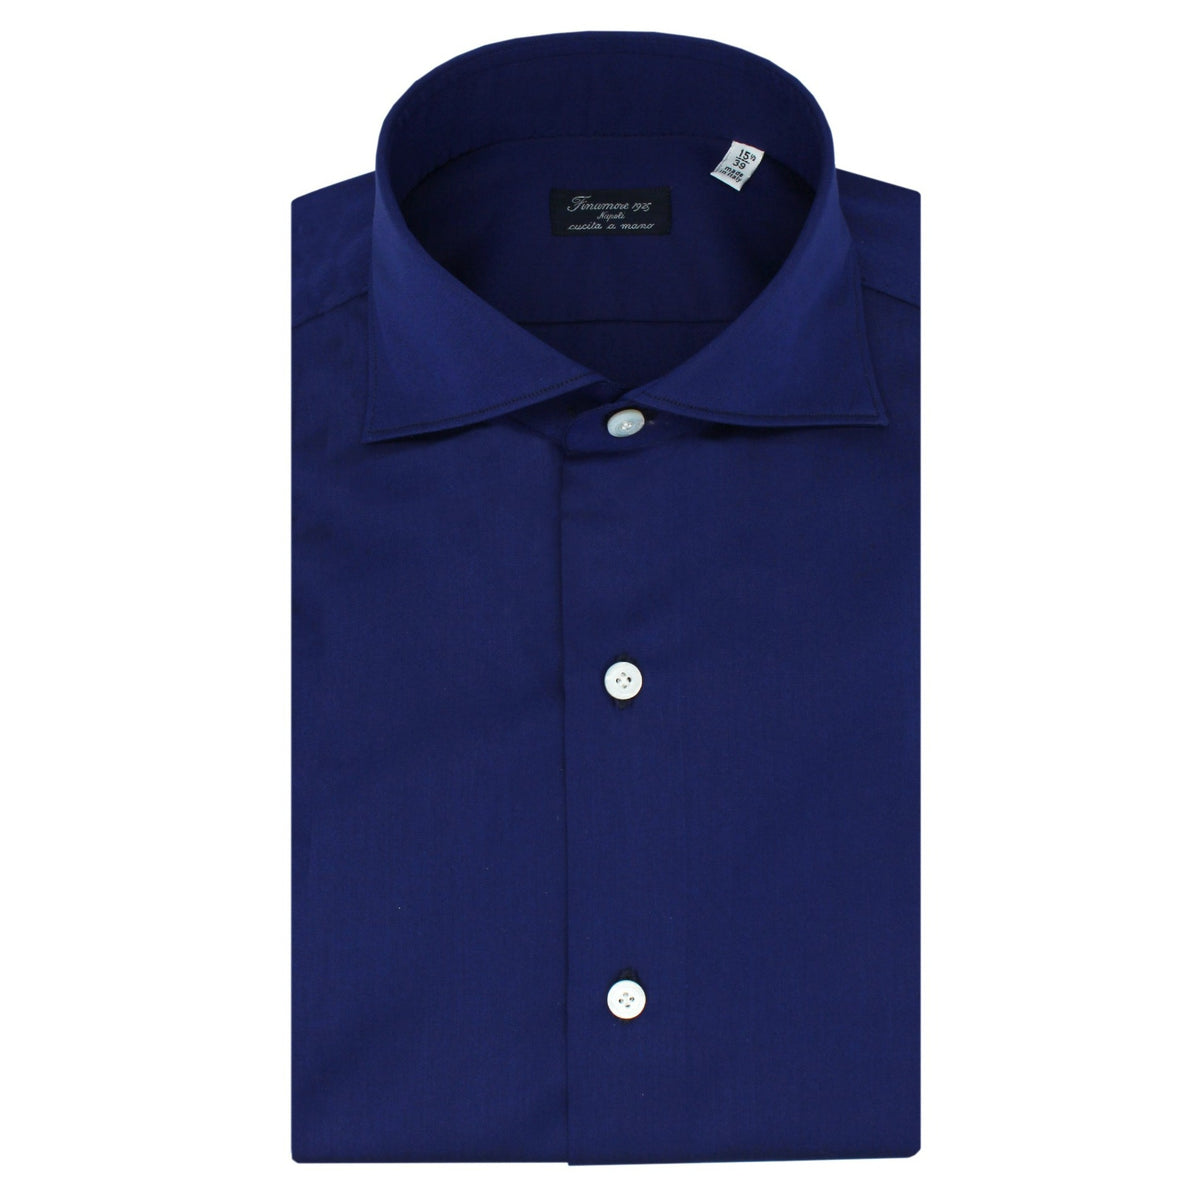 Classic MILANO slim fit dark blue cotton shirt